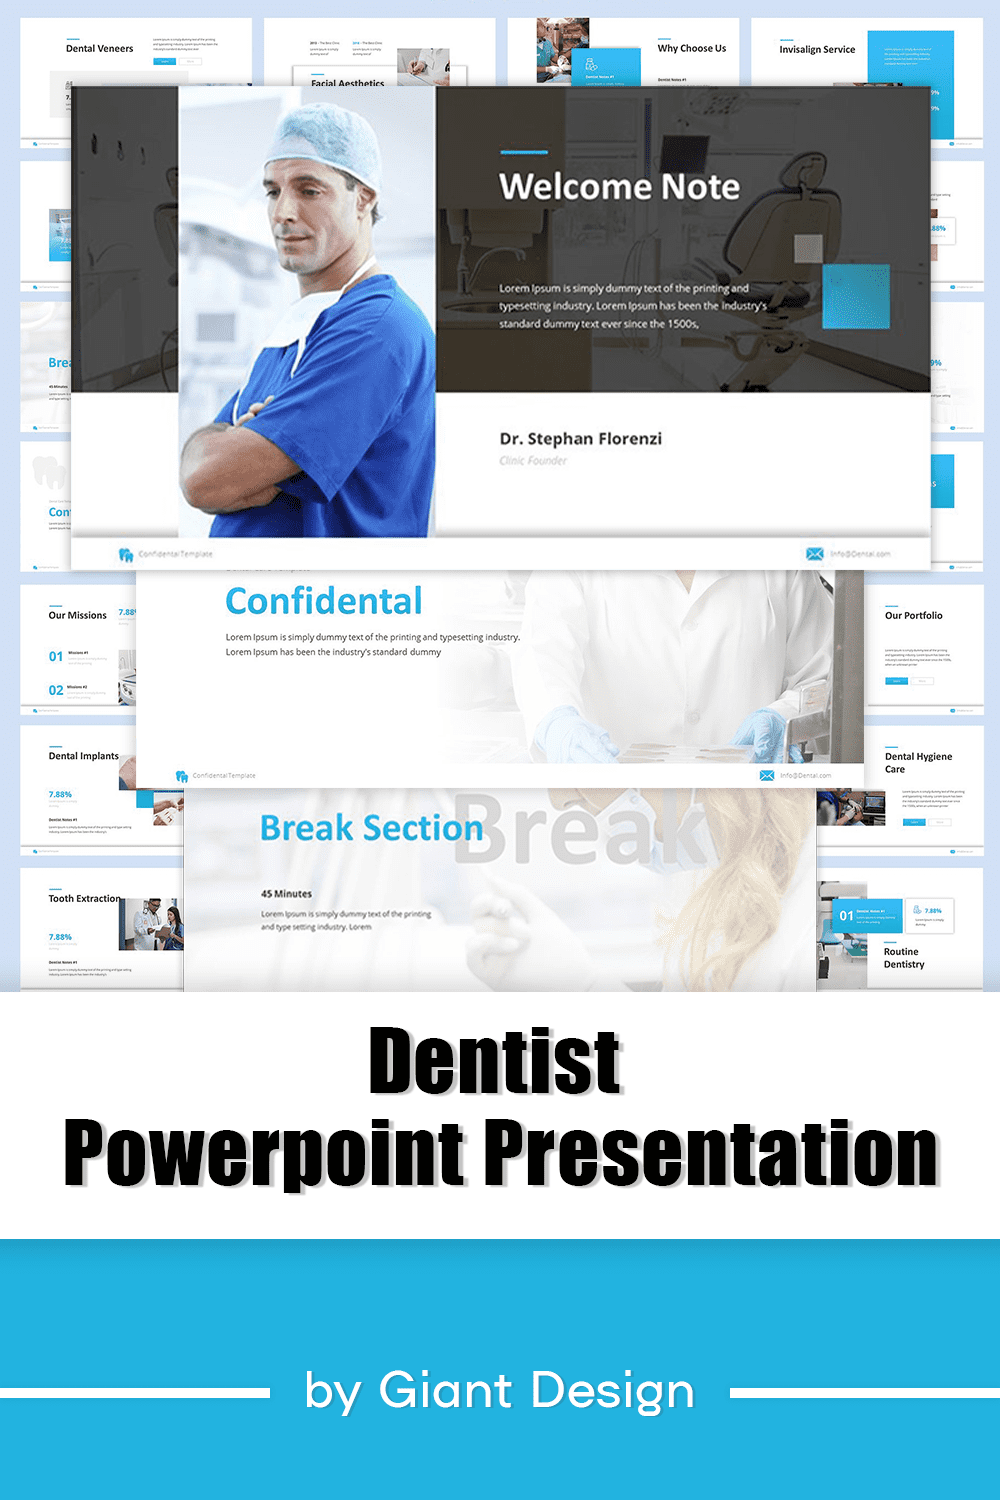 Dentist PowerPoint Presentation pinterest image.